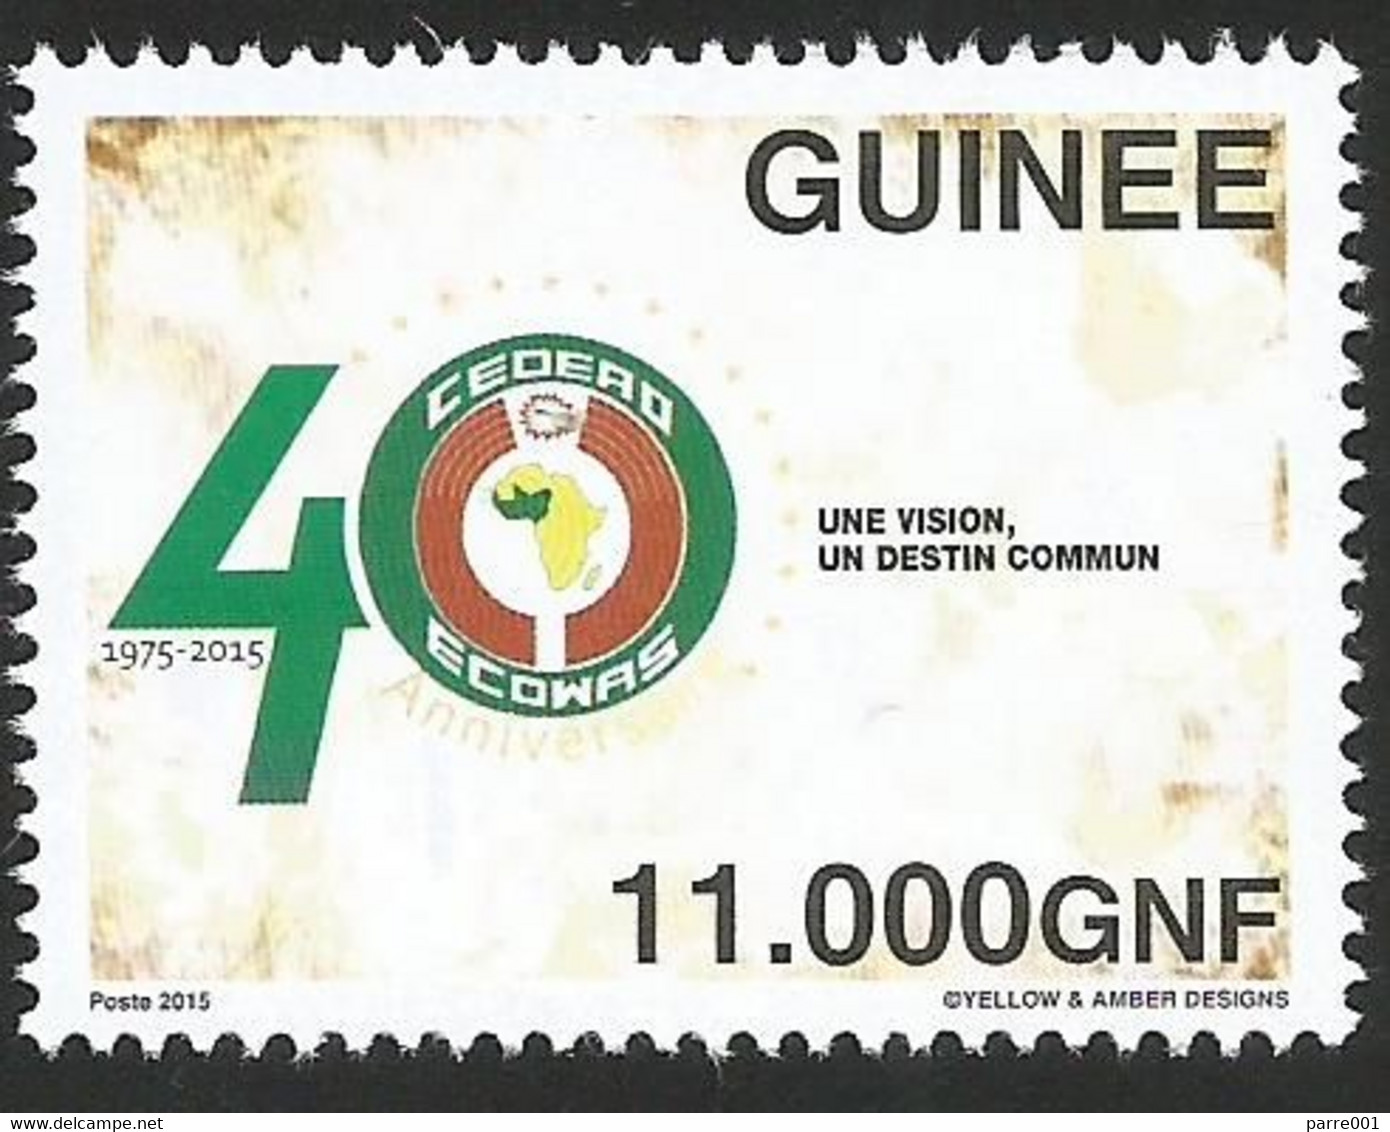 Guinee Guinea 2015 40th Anniversary ECOWAS CEDEAO Mint MNH - Emissions Communes